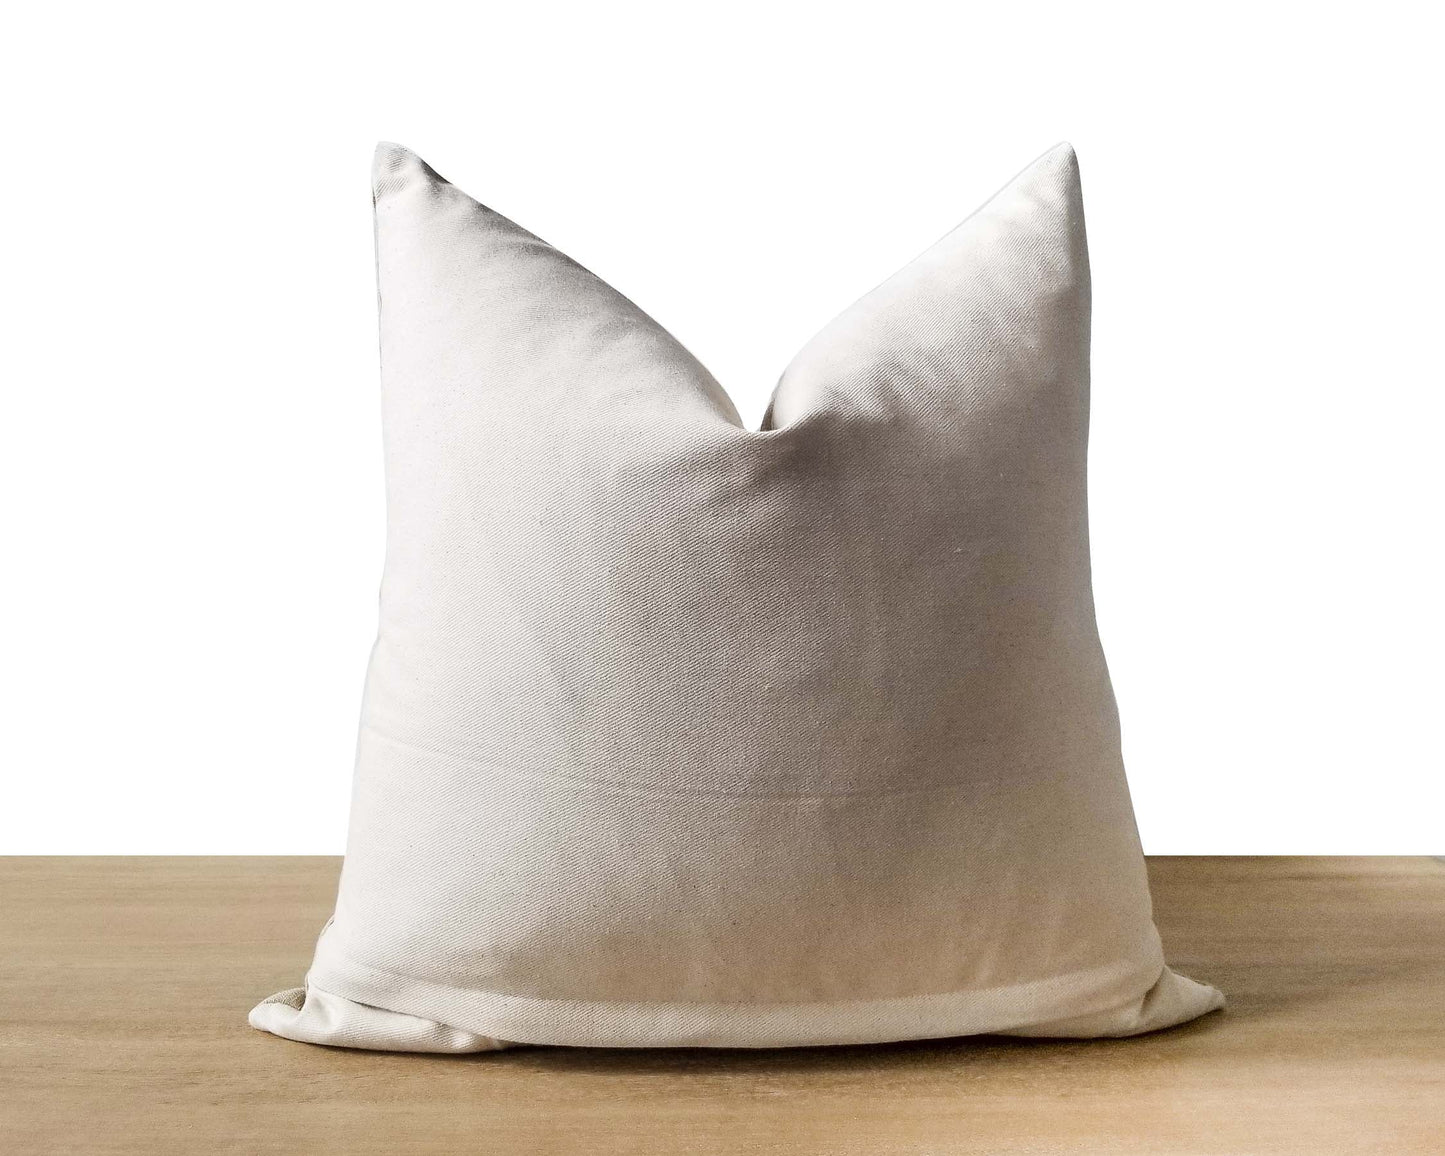 Gold Stripe White & Red Linen CELINE-3 Throw Pillow Cover